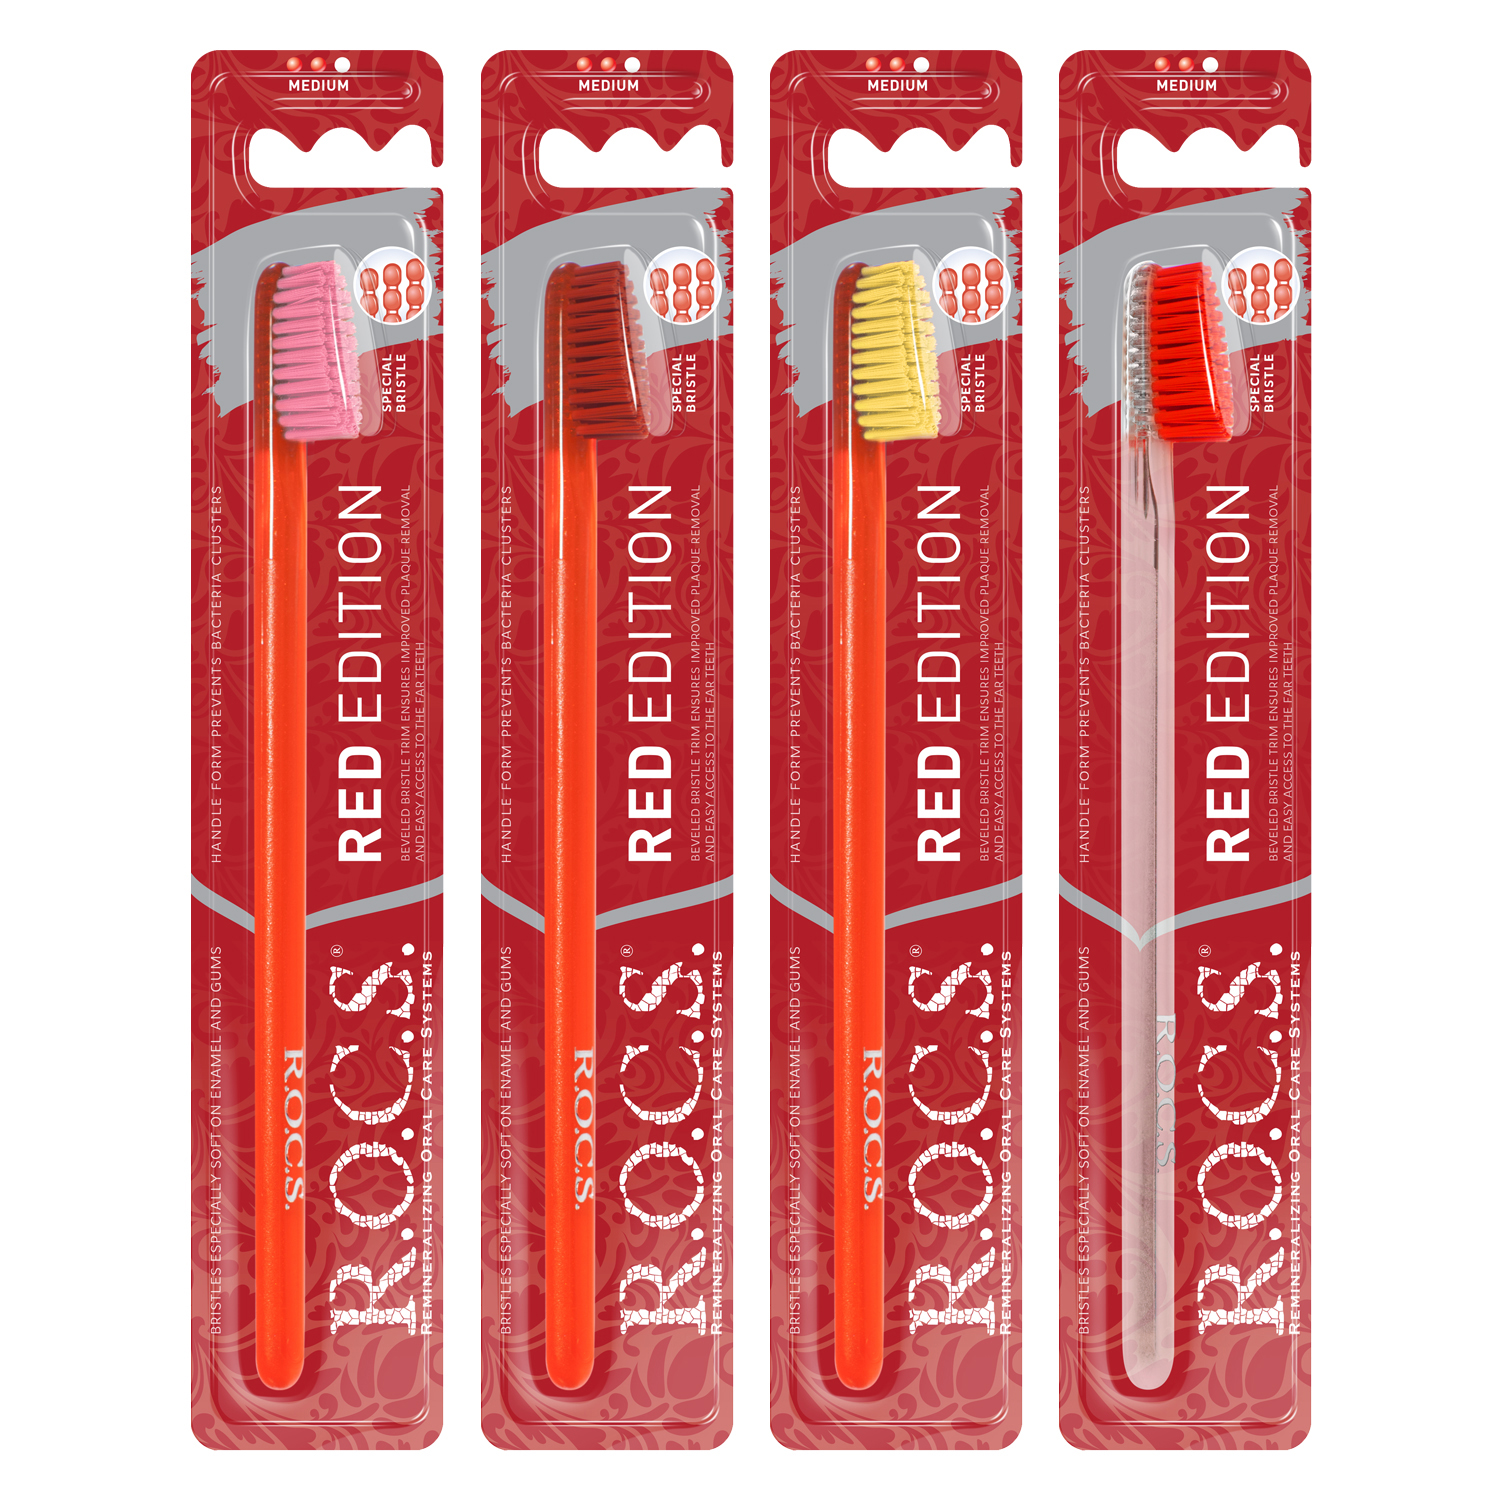 R.O.C.S. Red Edition medium Toothbrush Tandborste